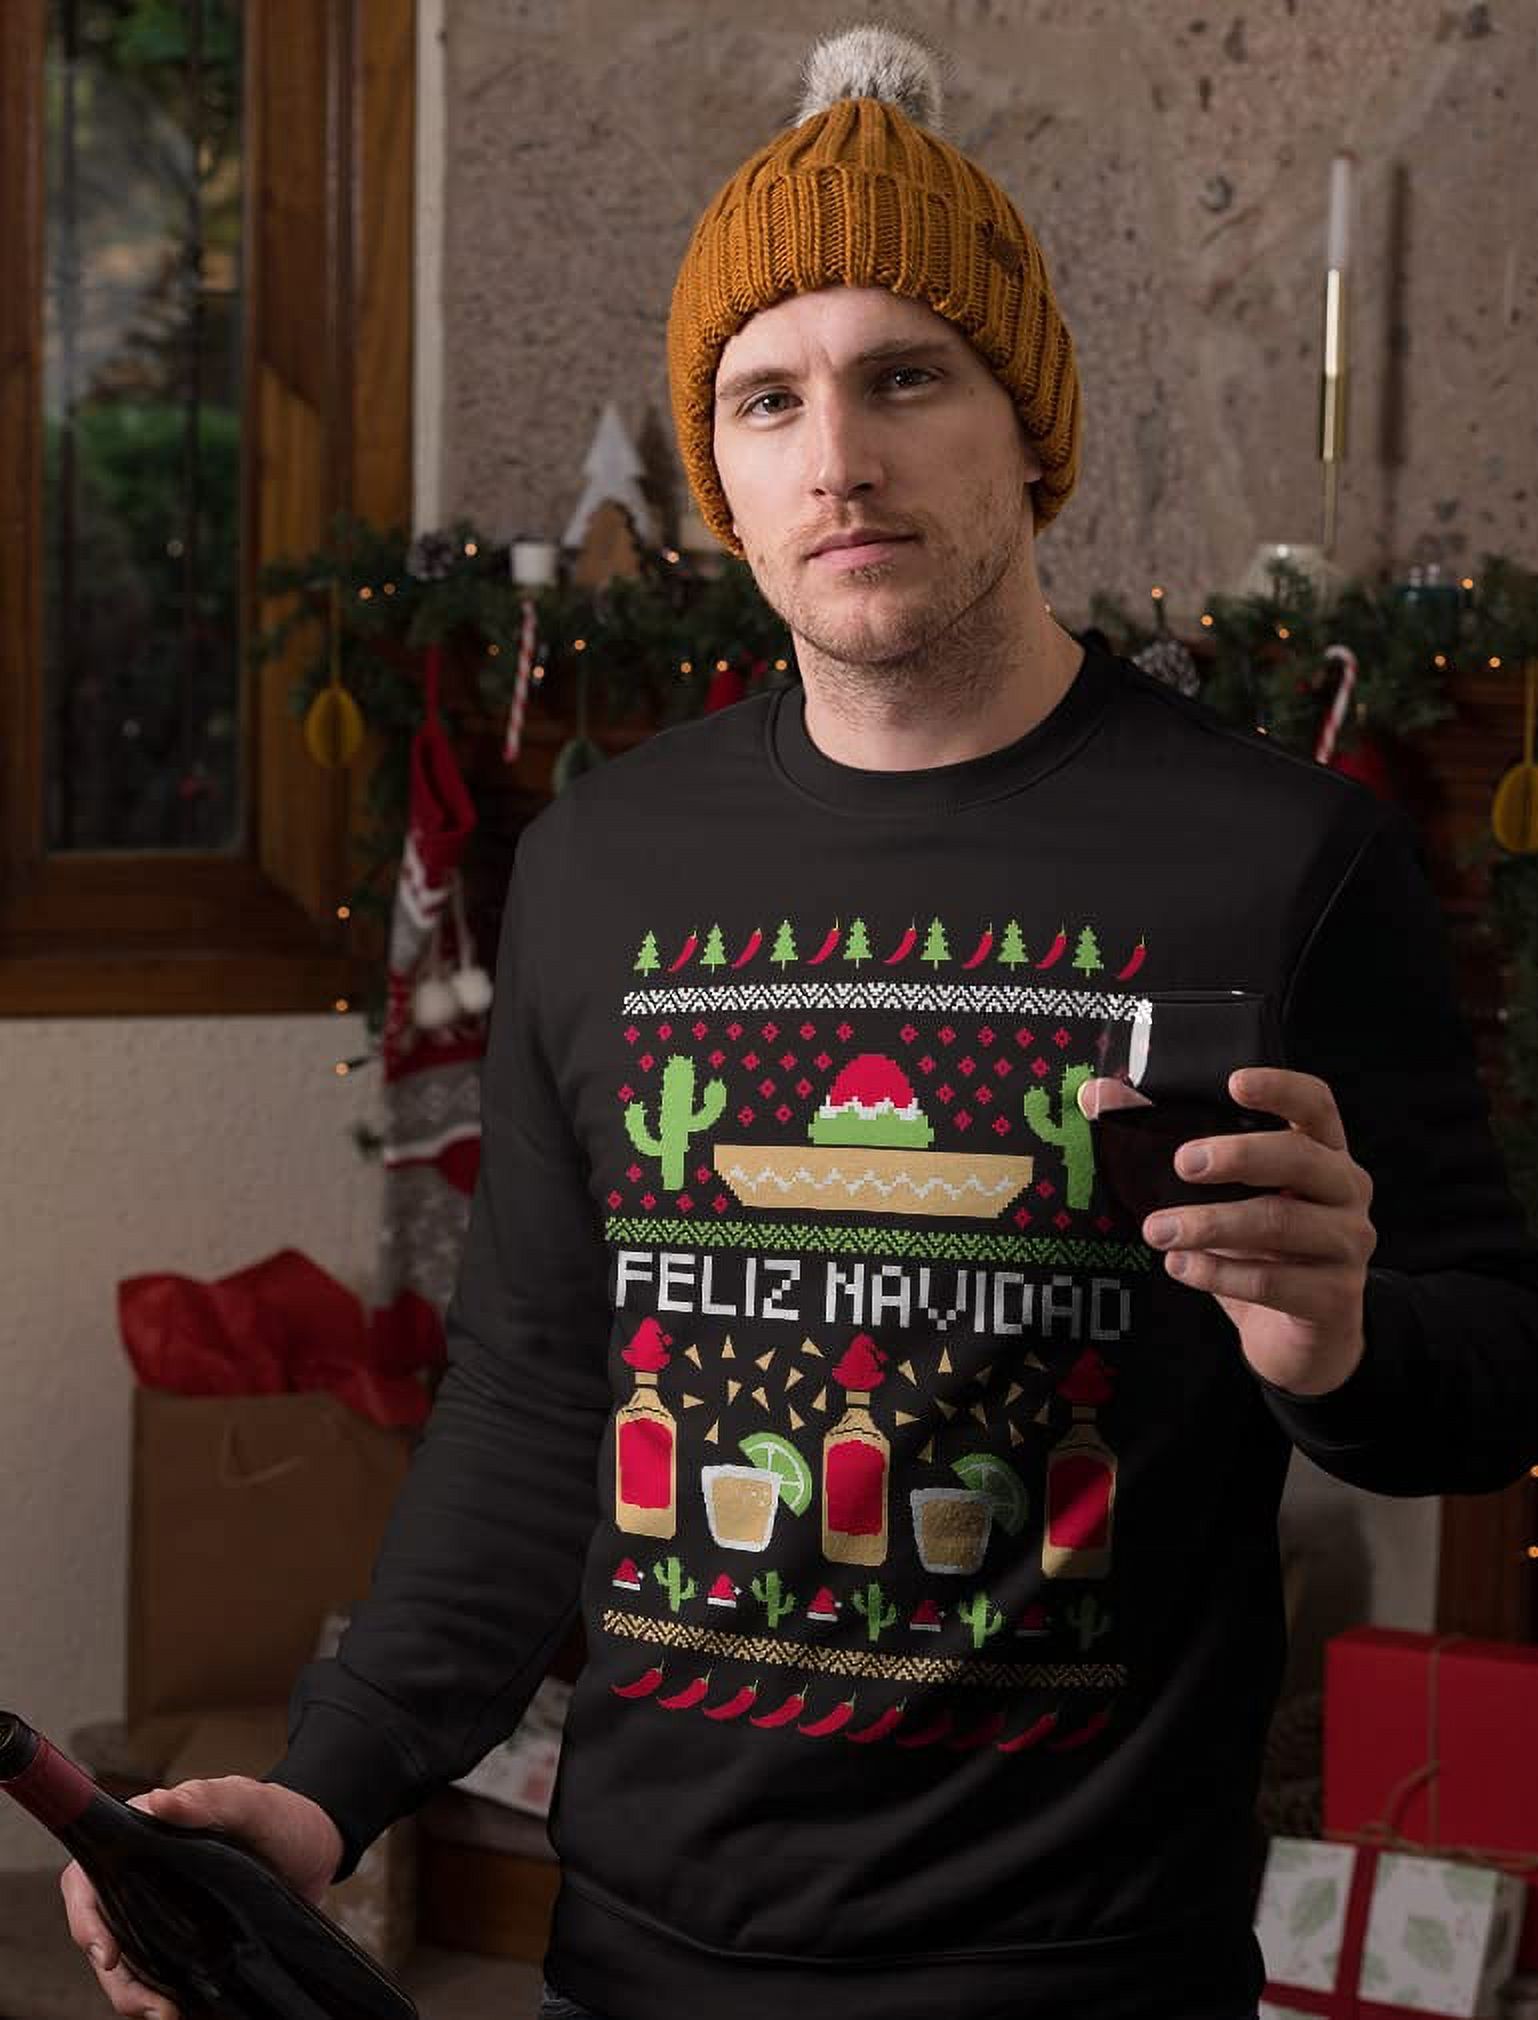 Tstars Mens Ugly Christmas Feliz Navidad Mexican Xmas Gift Christmas Gift Funny Humor Holiday Shirts Xmas Party Christmas Gifts for Him Sweatshirt. - image 2 of 6